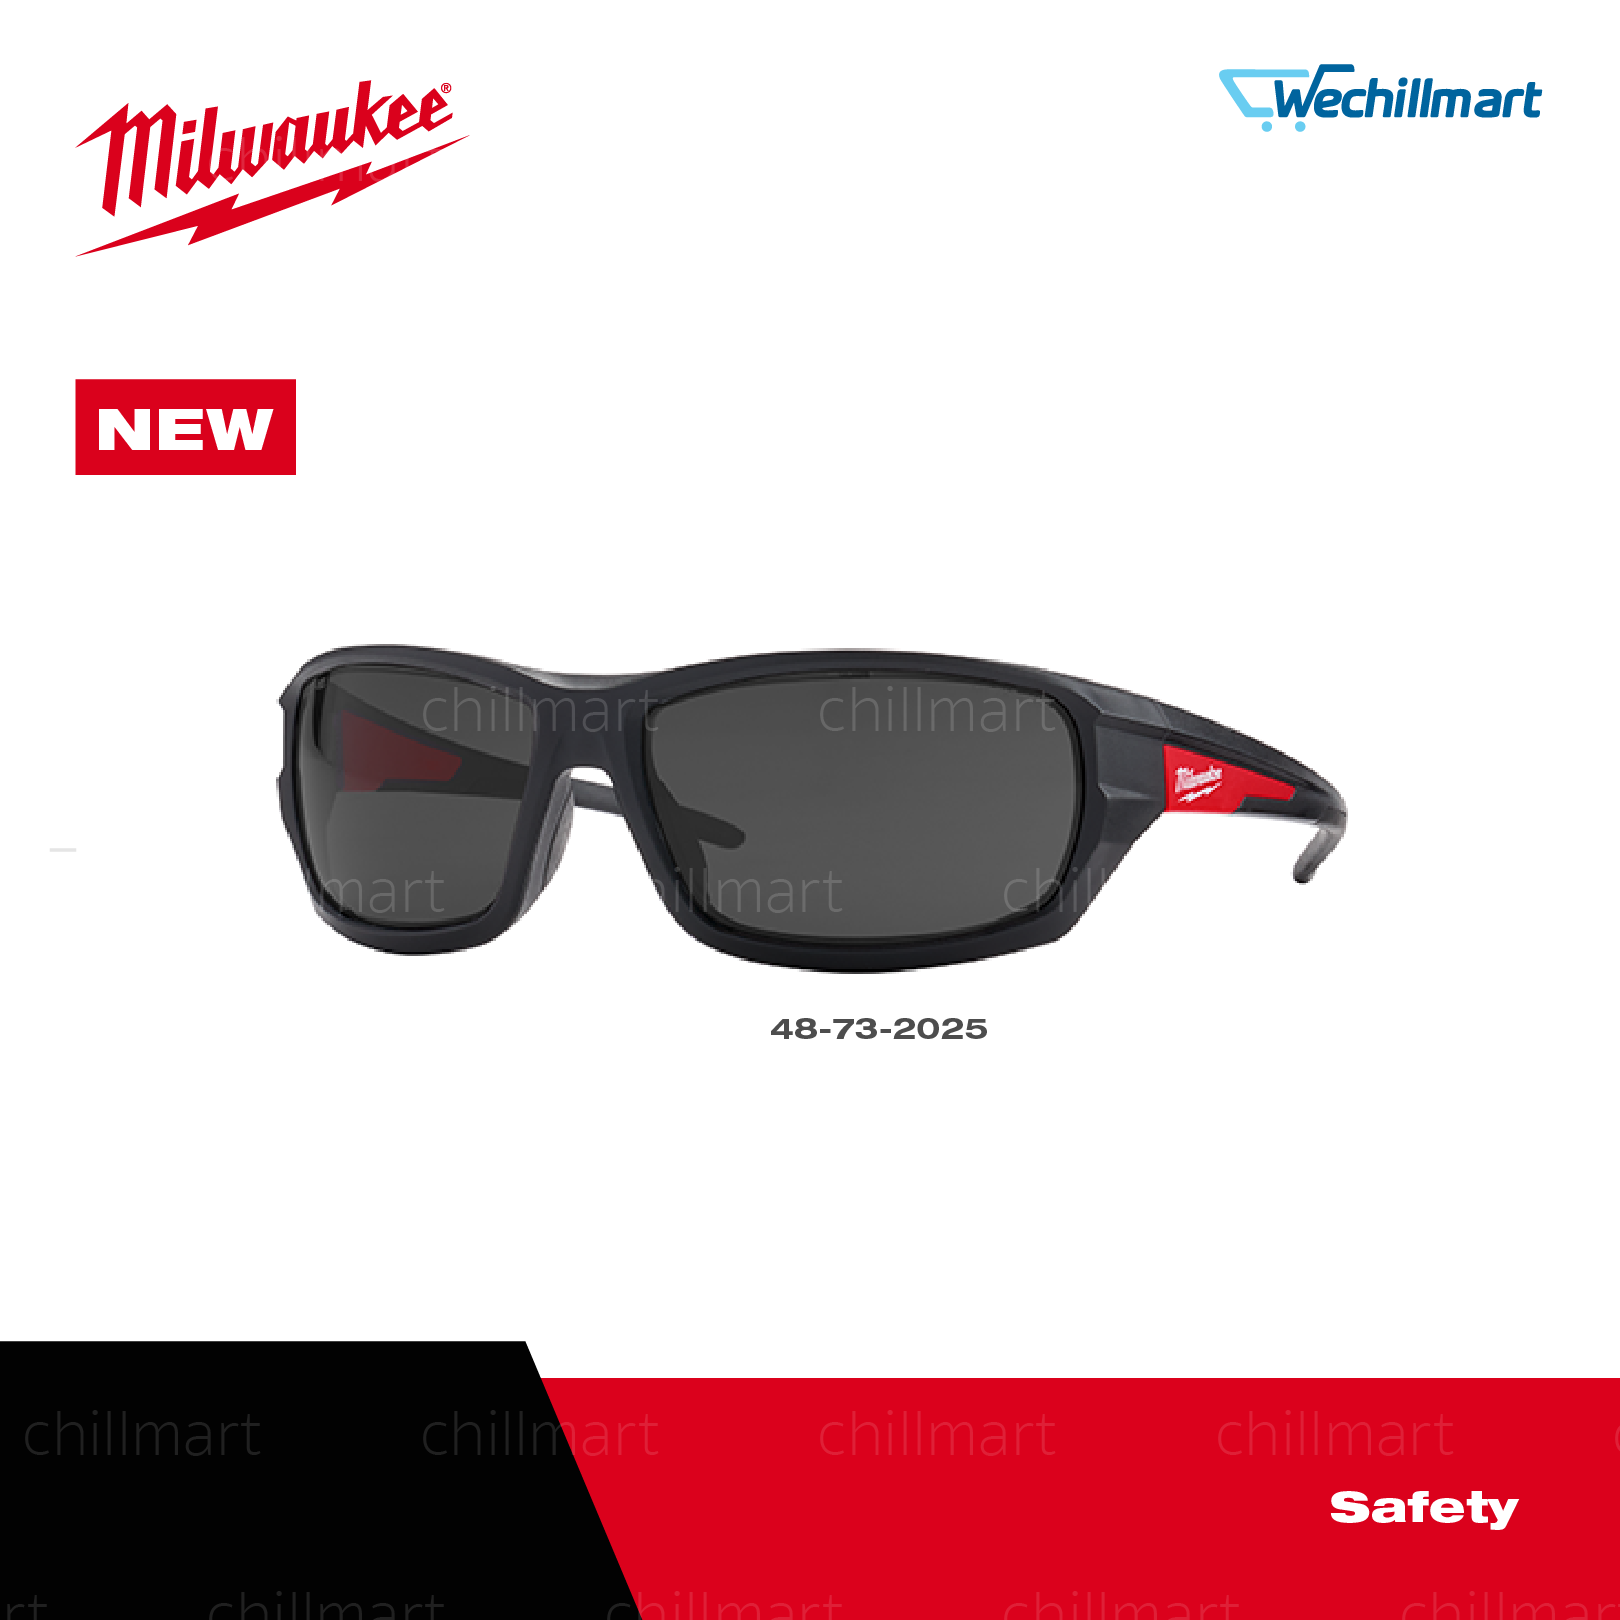 MILWAUKEE แว่นตา Safety (48-73-2025)